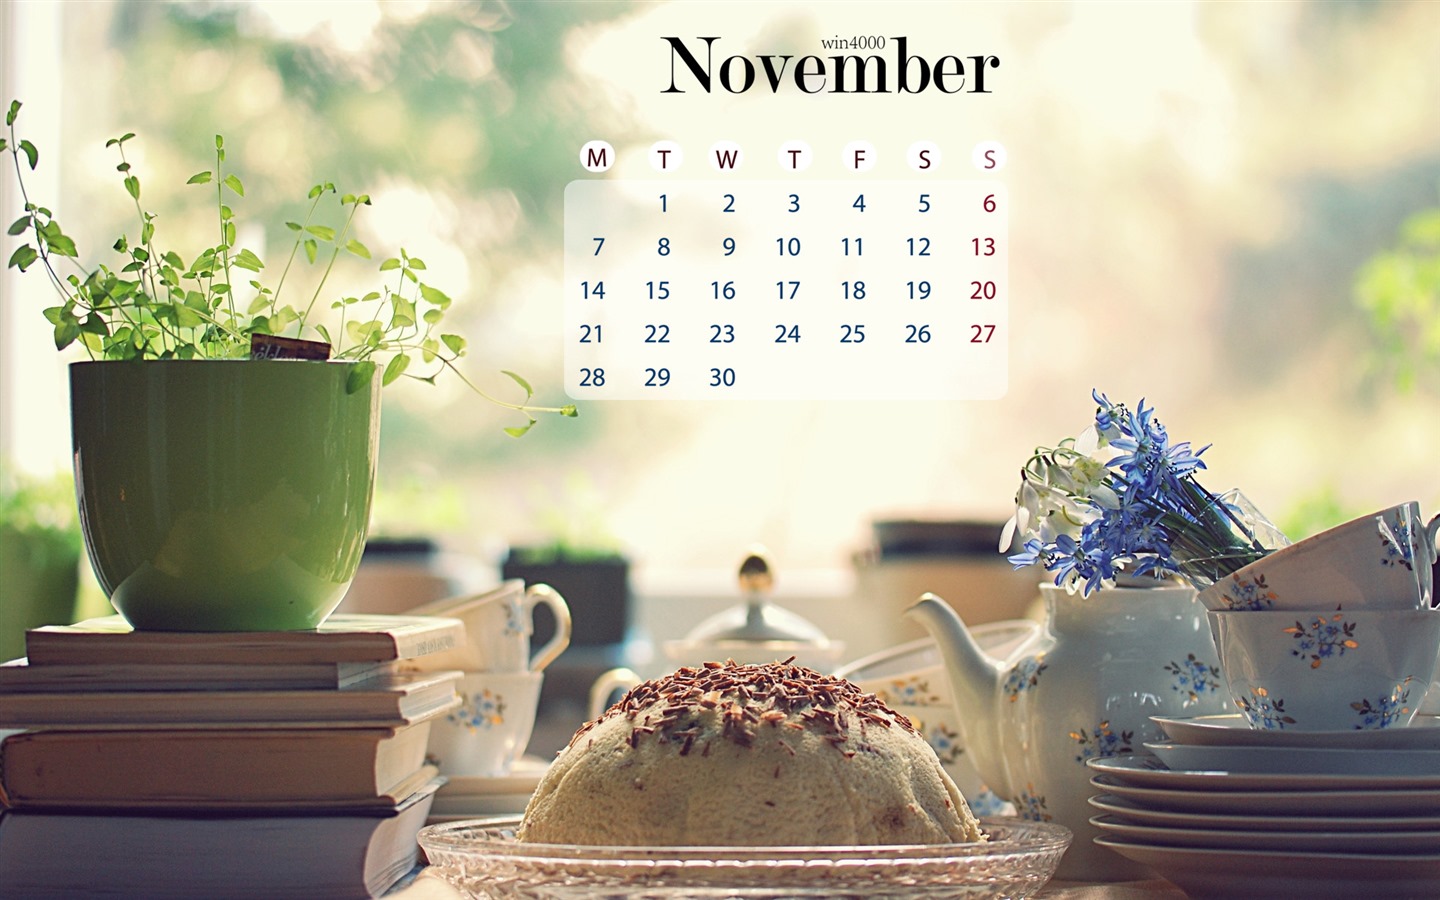 November 2016 calendar wallpaper (1) #18 - 1440x900